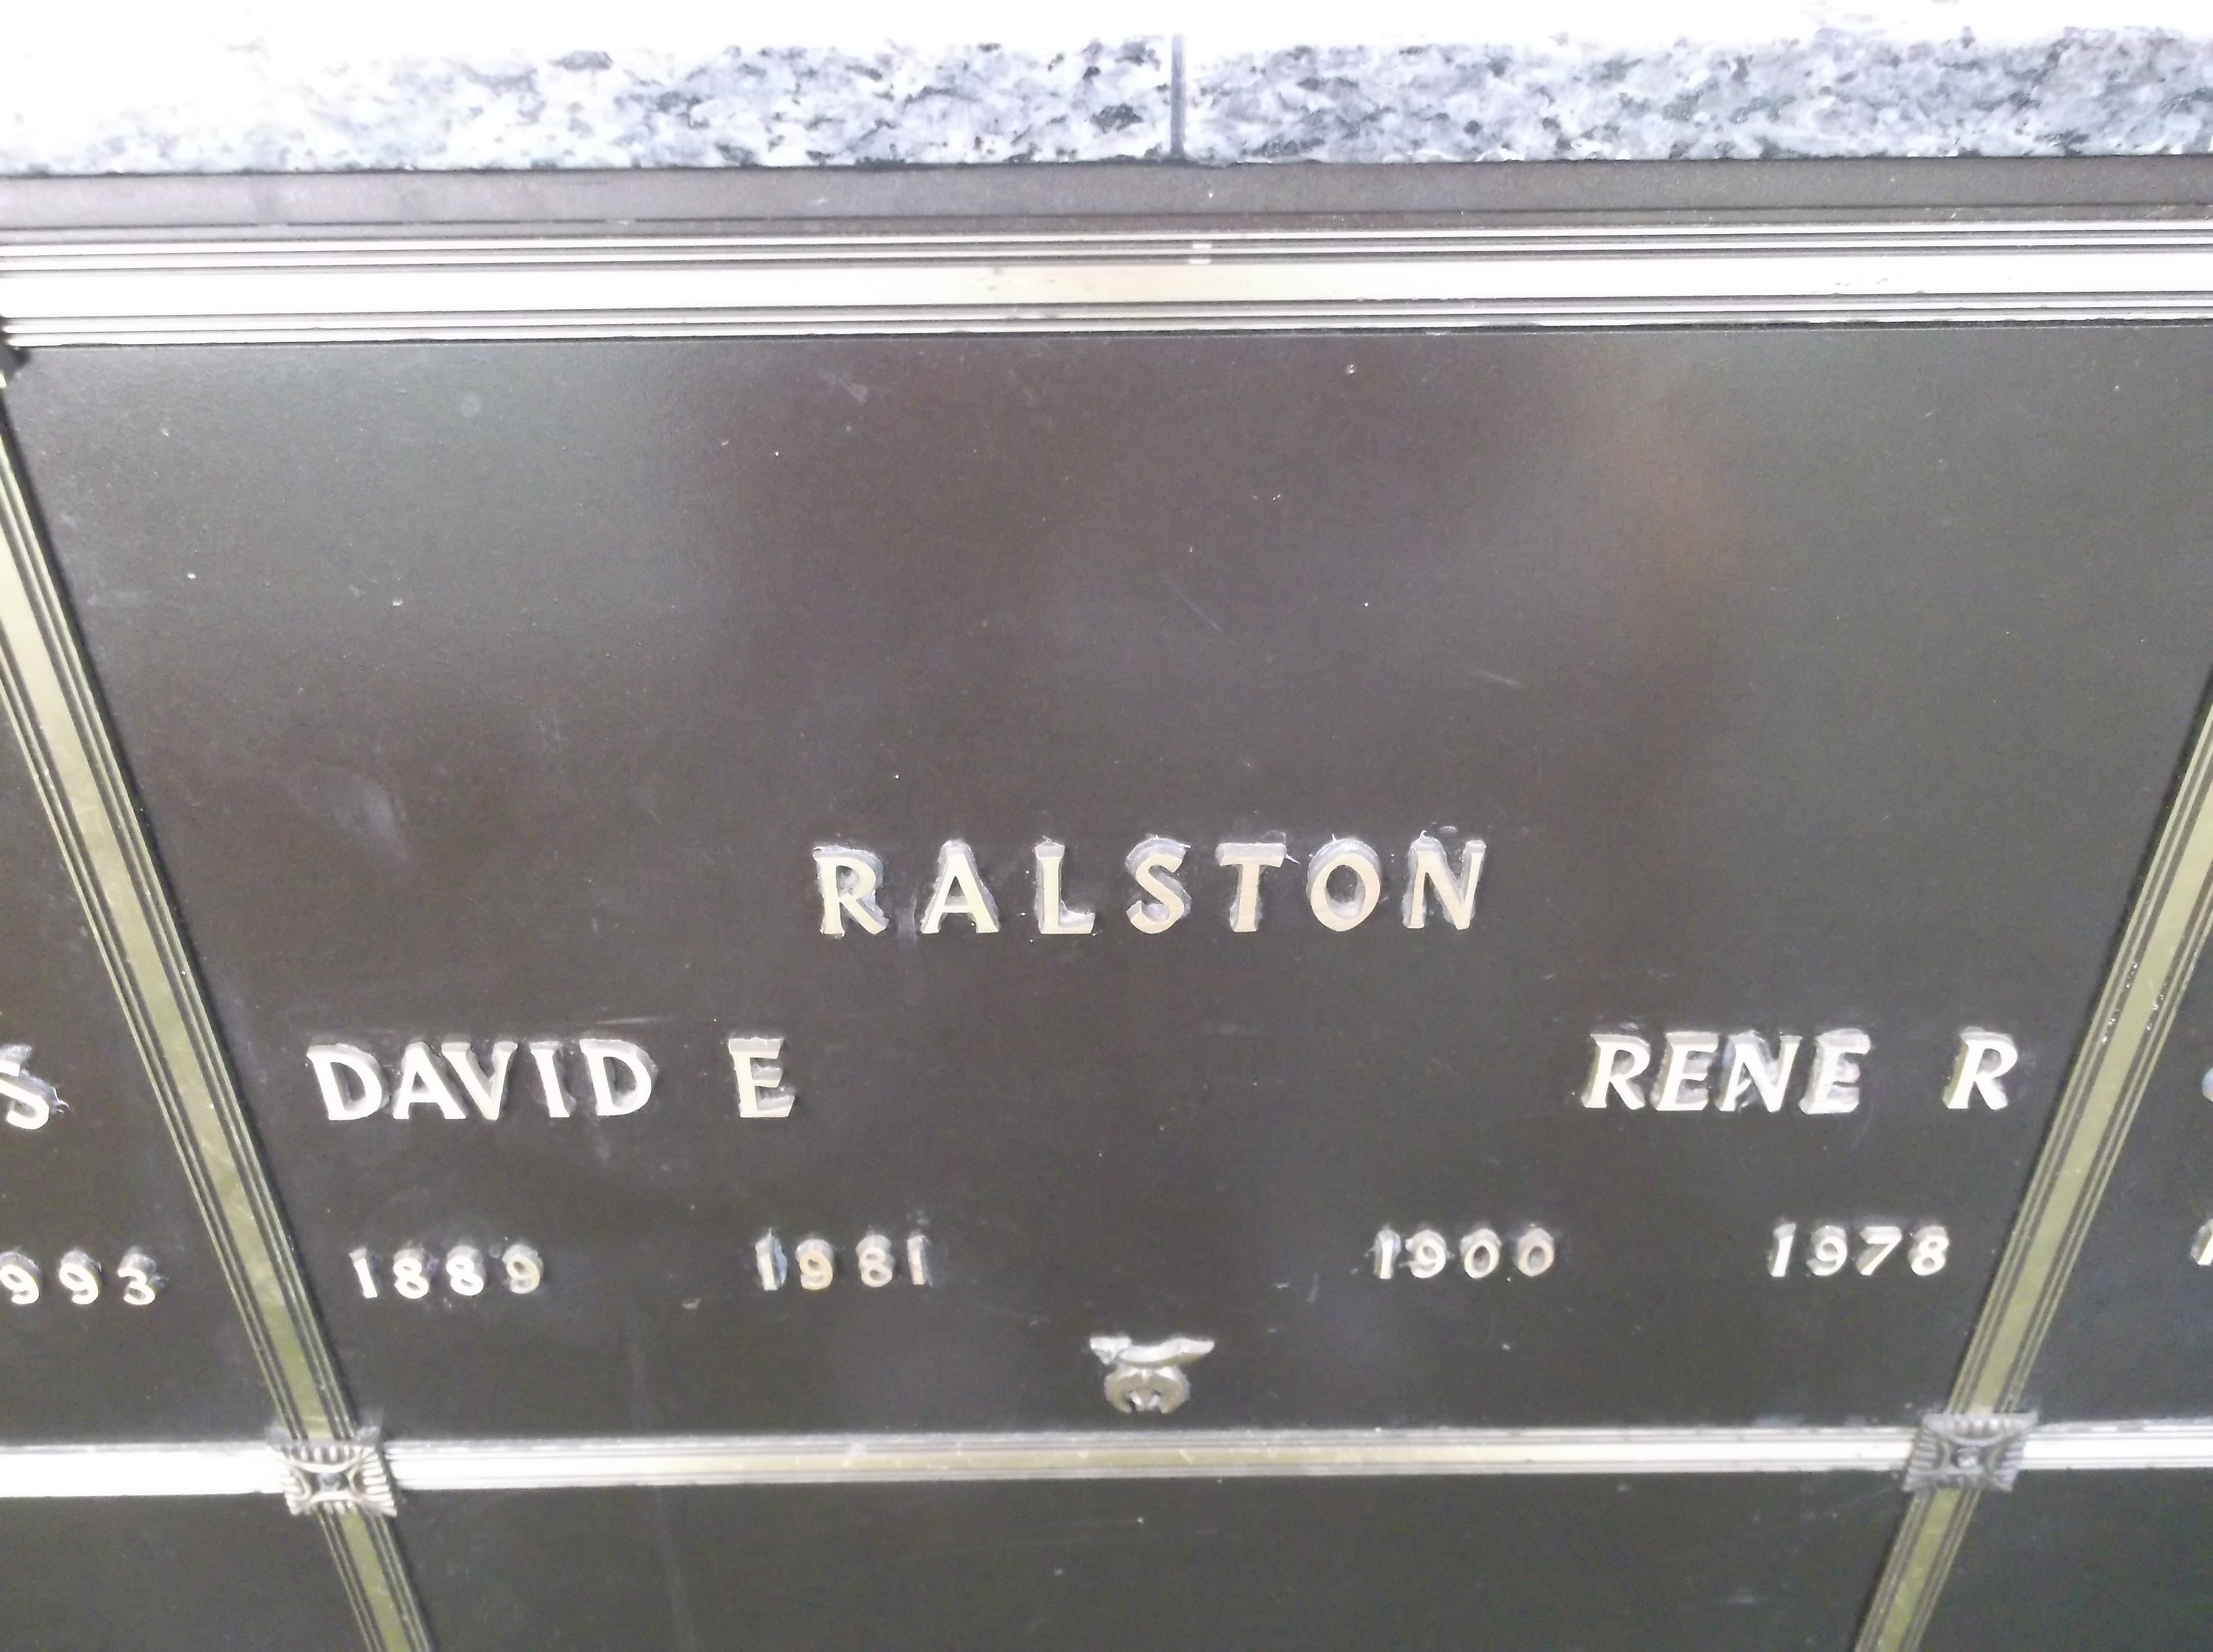 Rene R Ralston